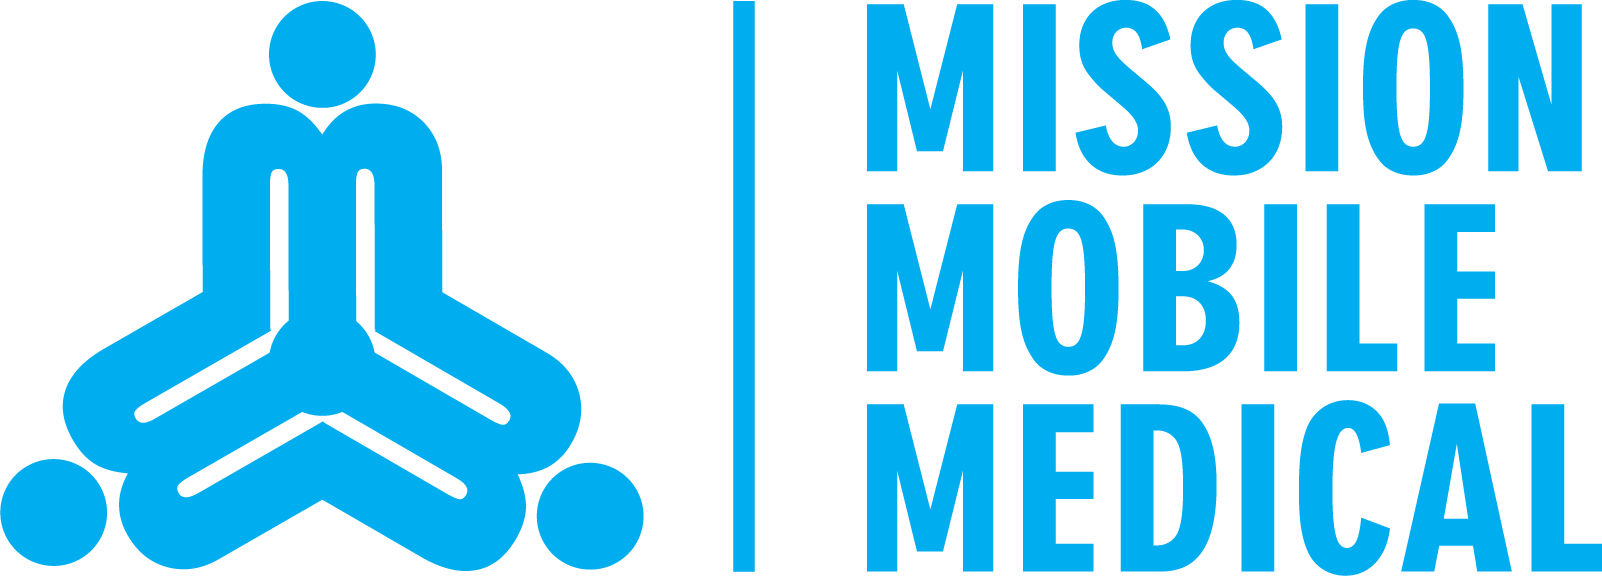 MMM horizontal logo-4